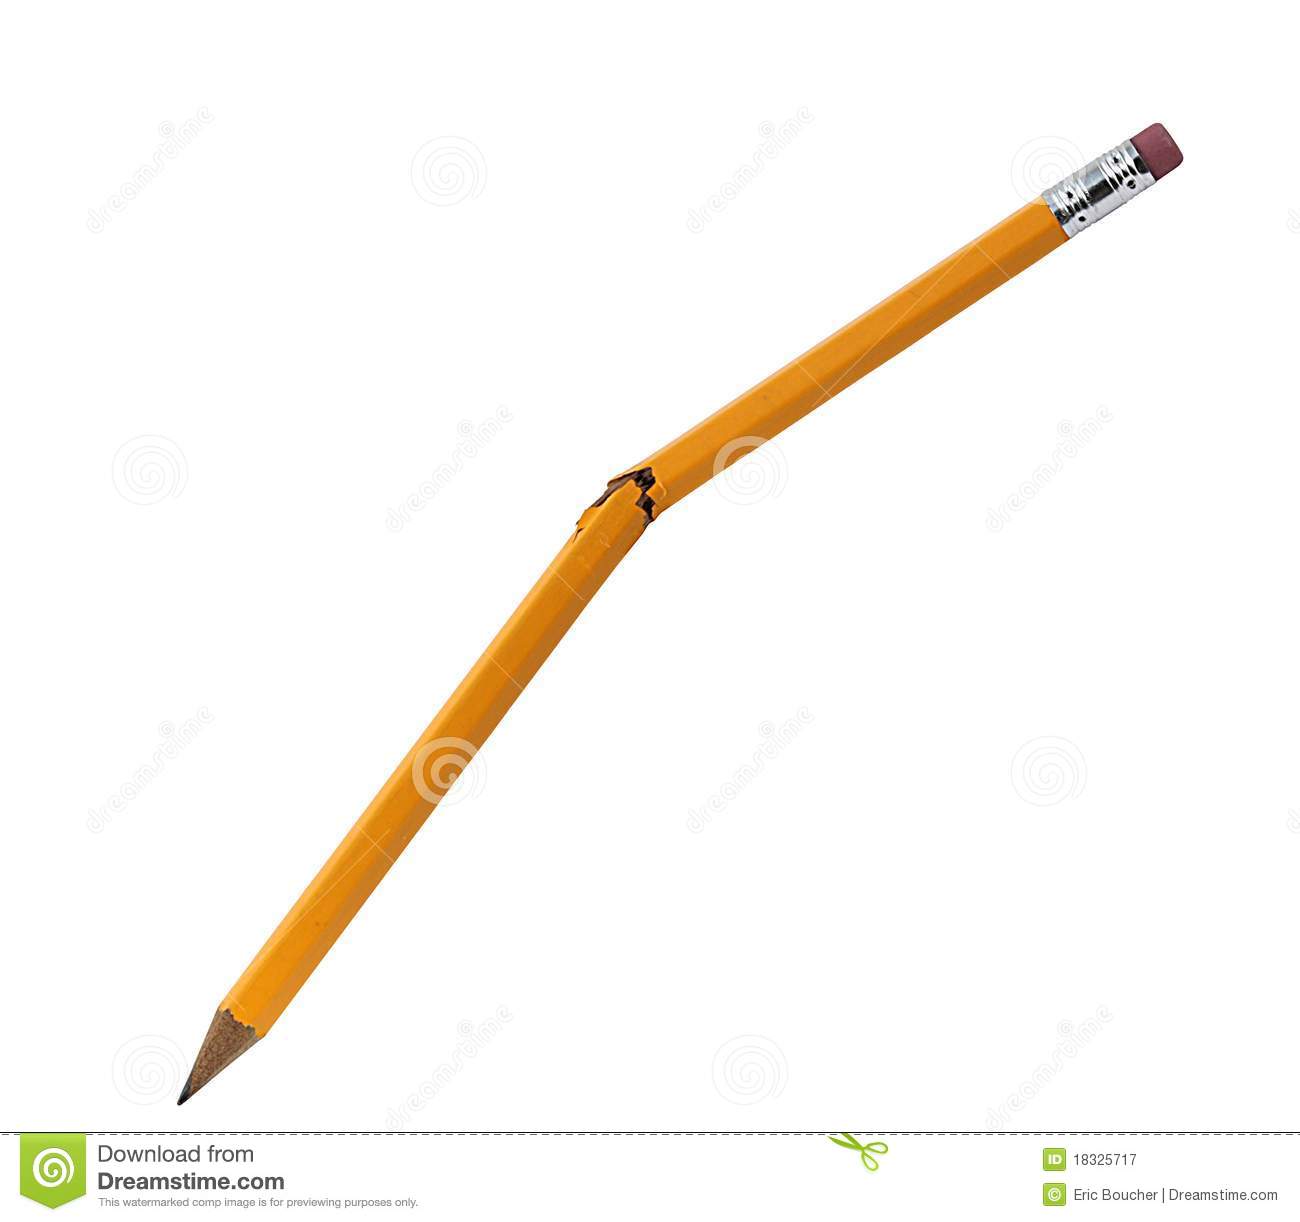 Broken Pencil Royalty Free Stock Photography   Image  18325717